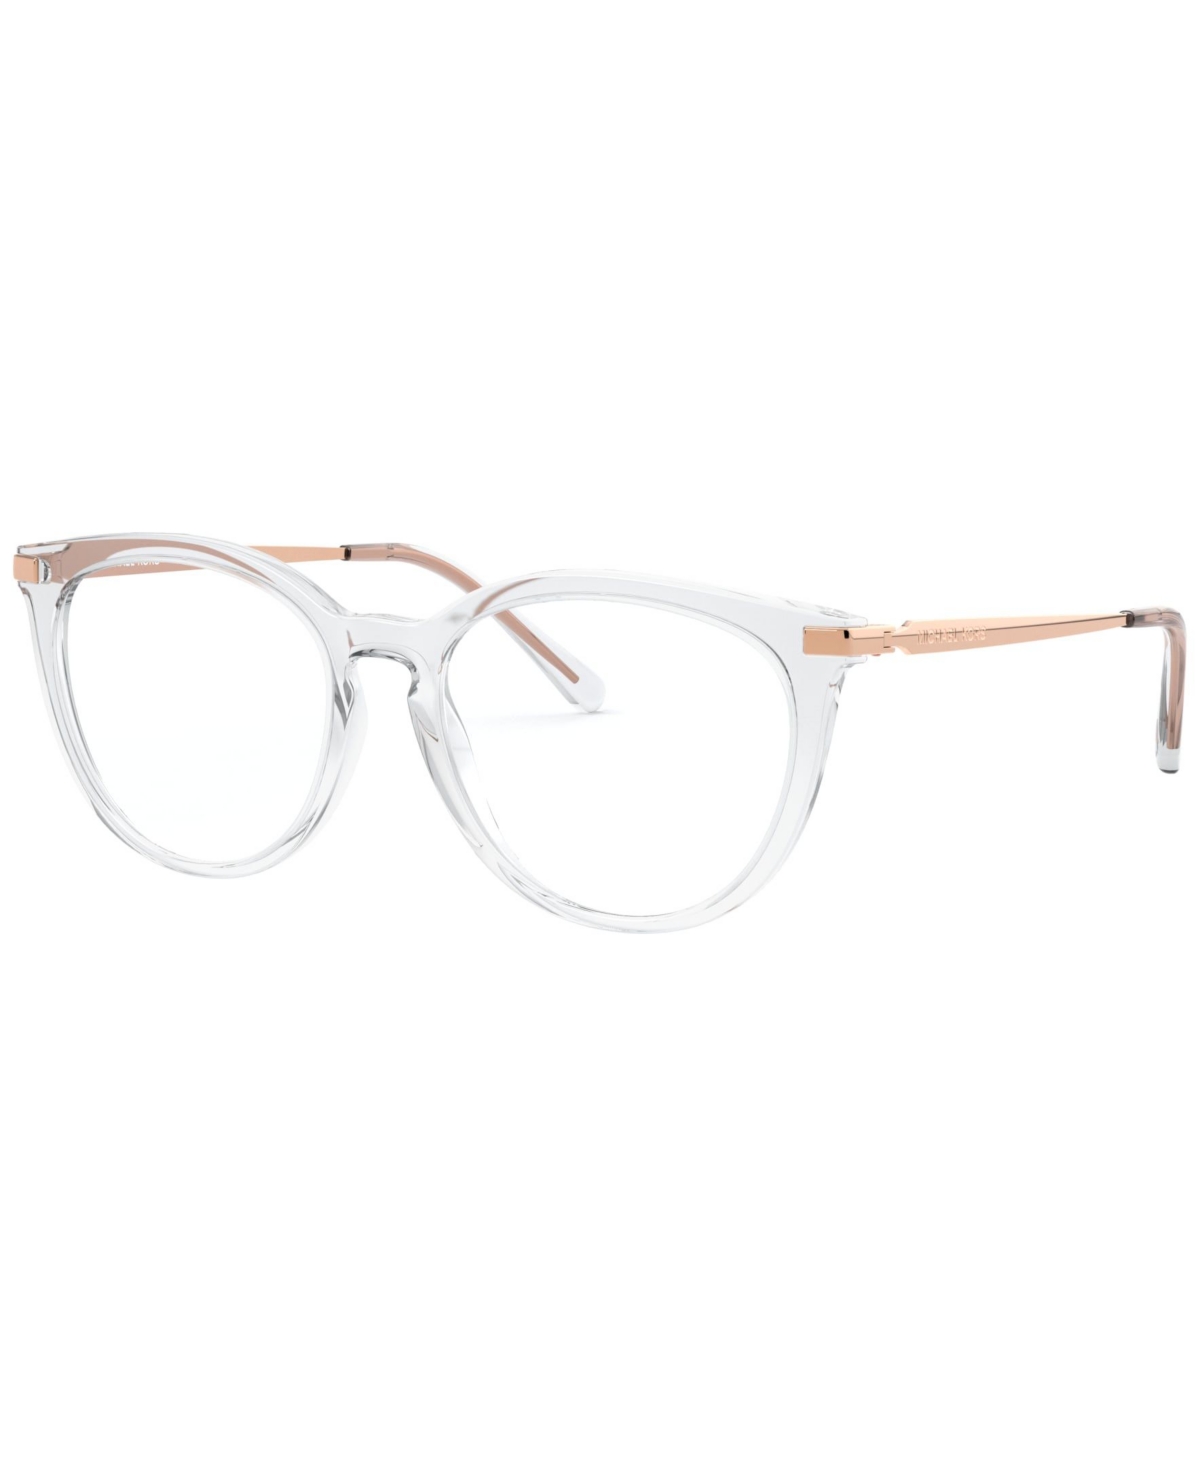 MK4074 Women's Square Eyeglasses - Clear